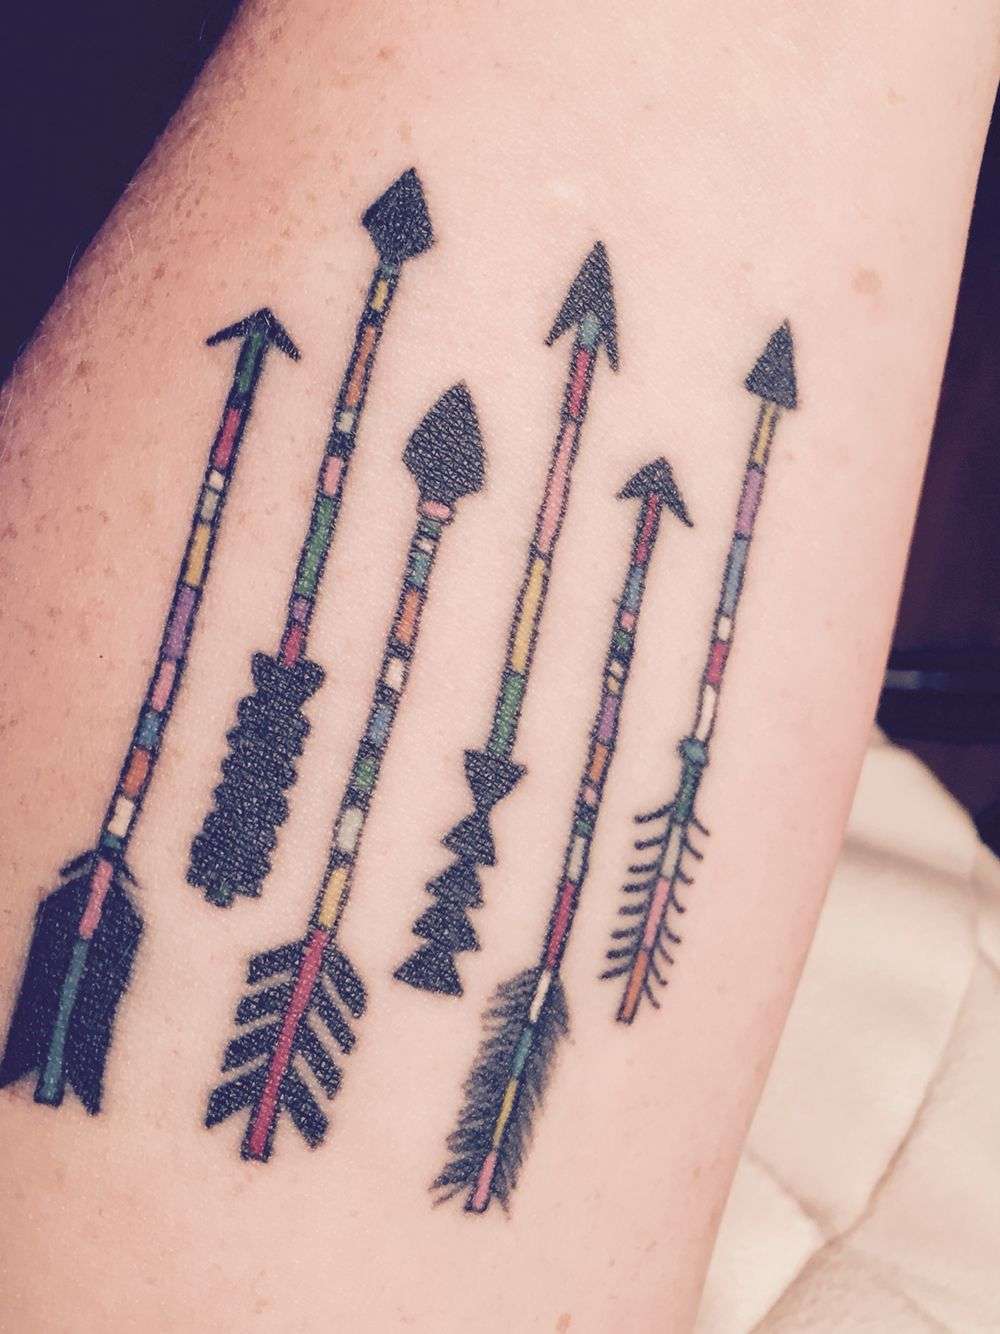 Tatuaje de seis flechas en colores